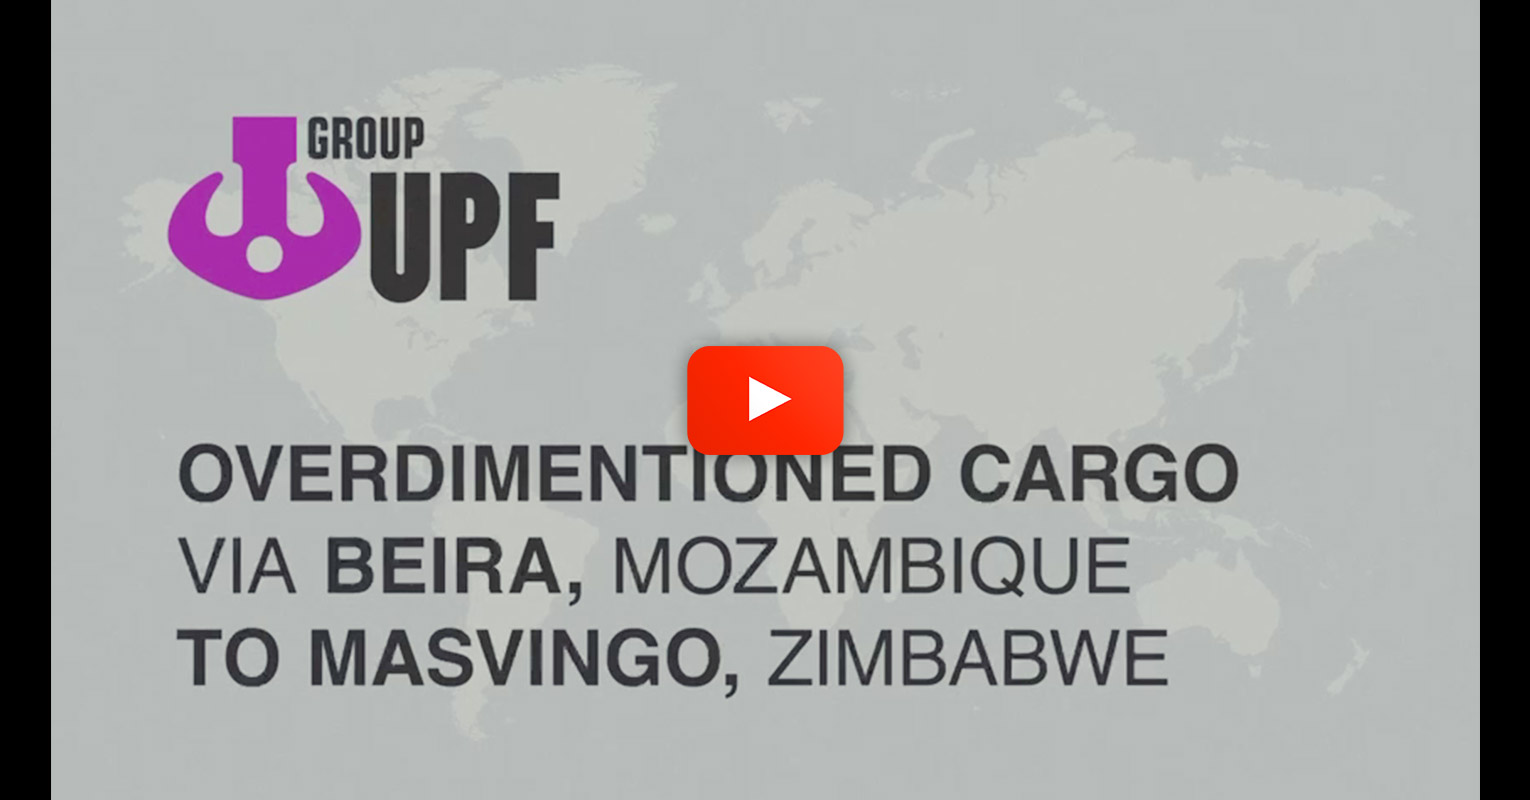 Video - UPF Transported OOG Cargo via Beira, Mozambique to Masvingo, Zimbabwe